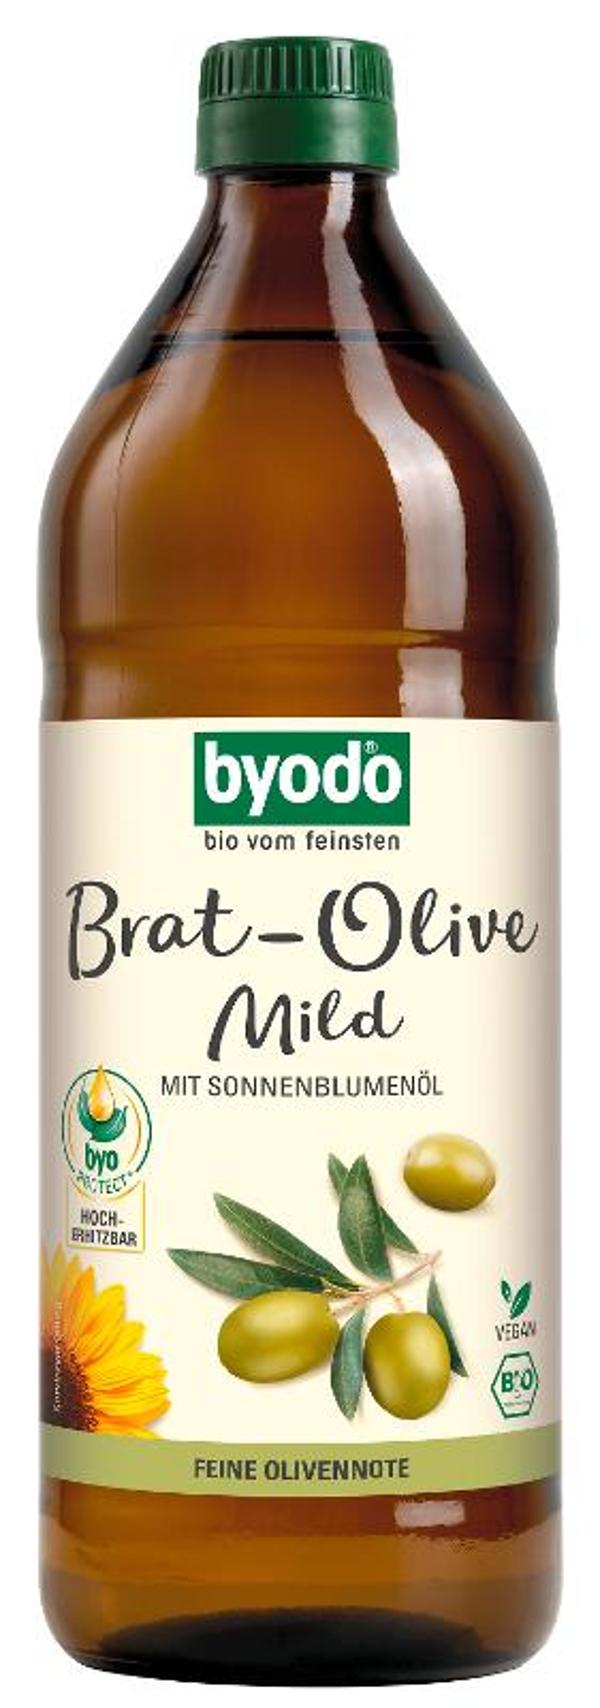 Produktfoto zu Brat-Öl Olive mild, 0,75 l